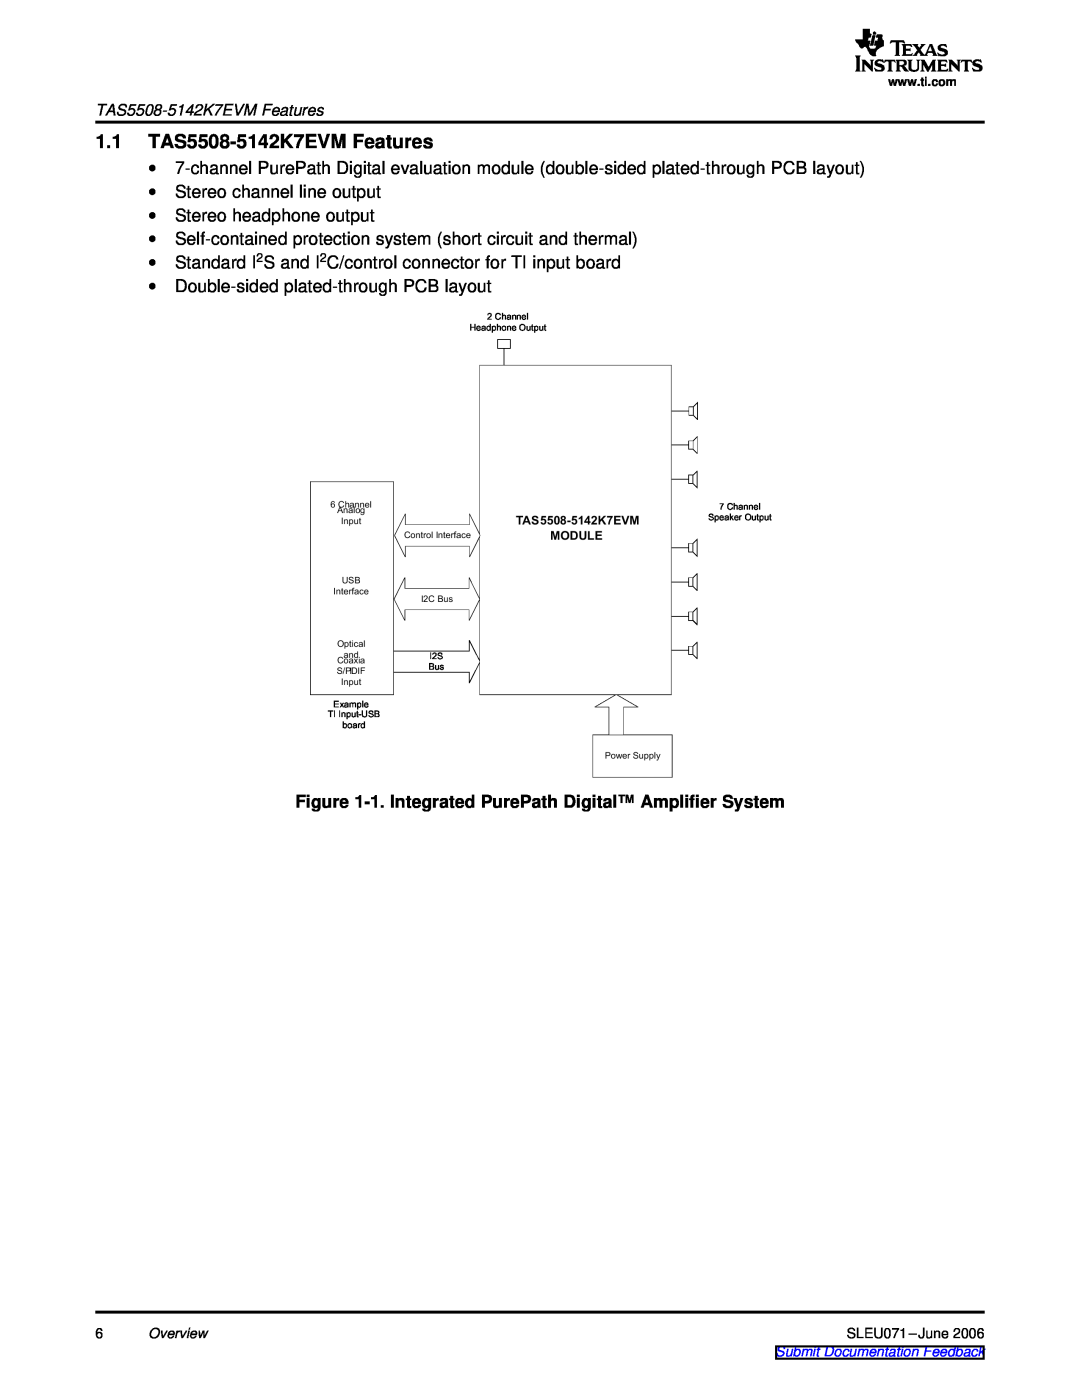 Texas Instruments manual 1.1TAS5508-5142K7EVMFeatures 